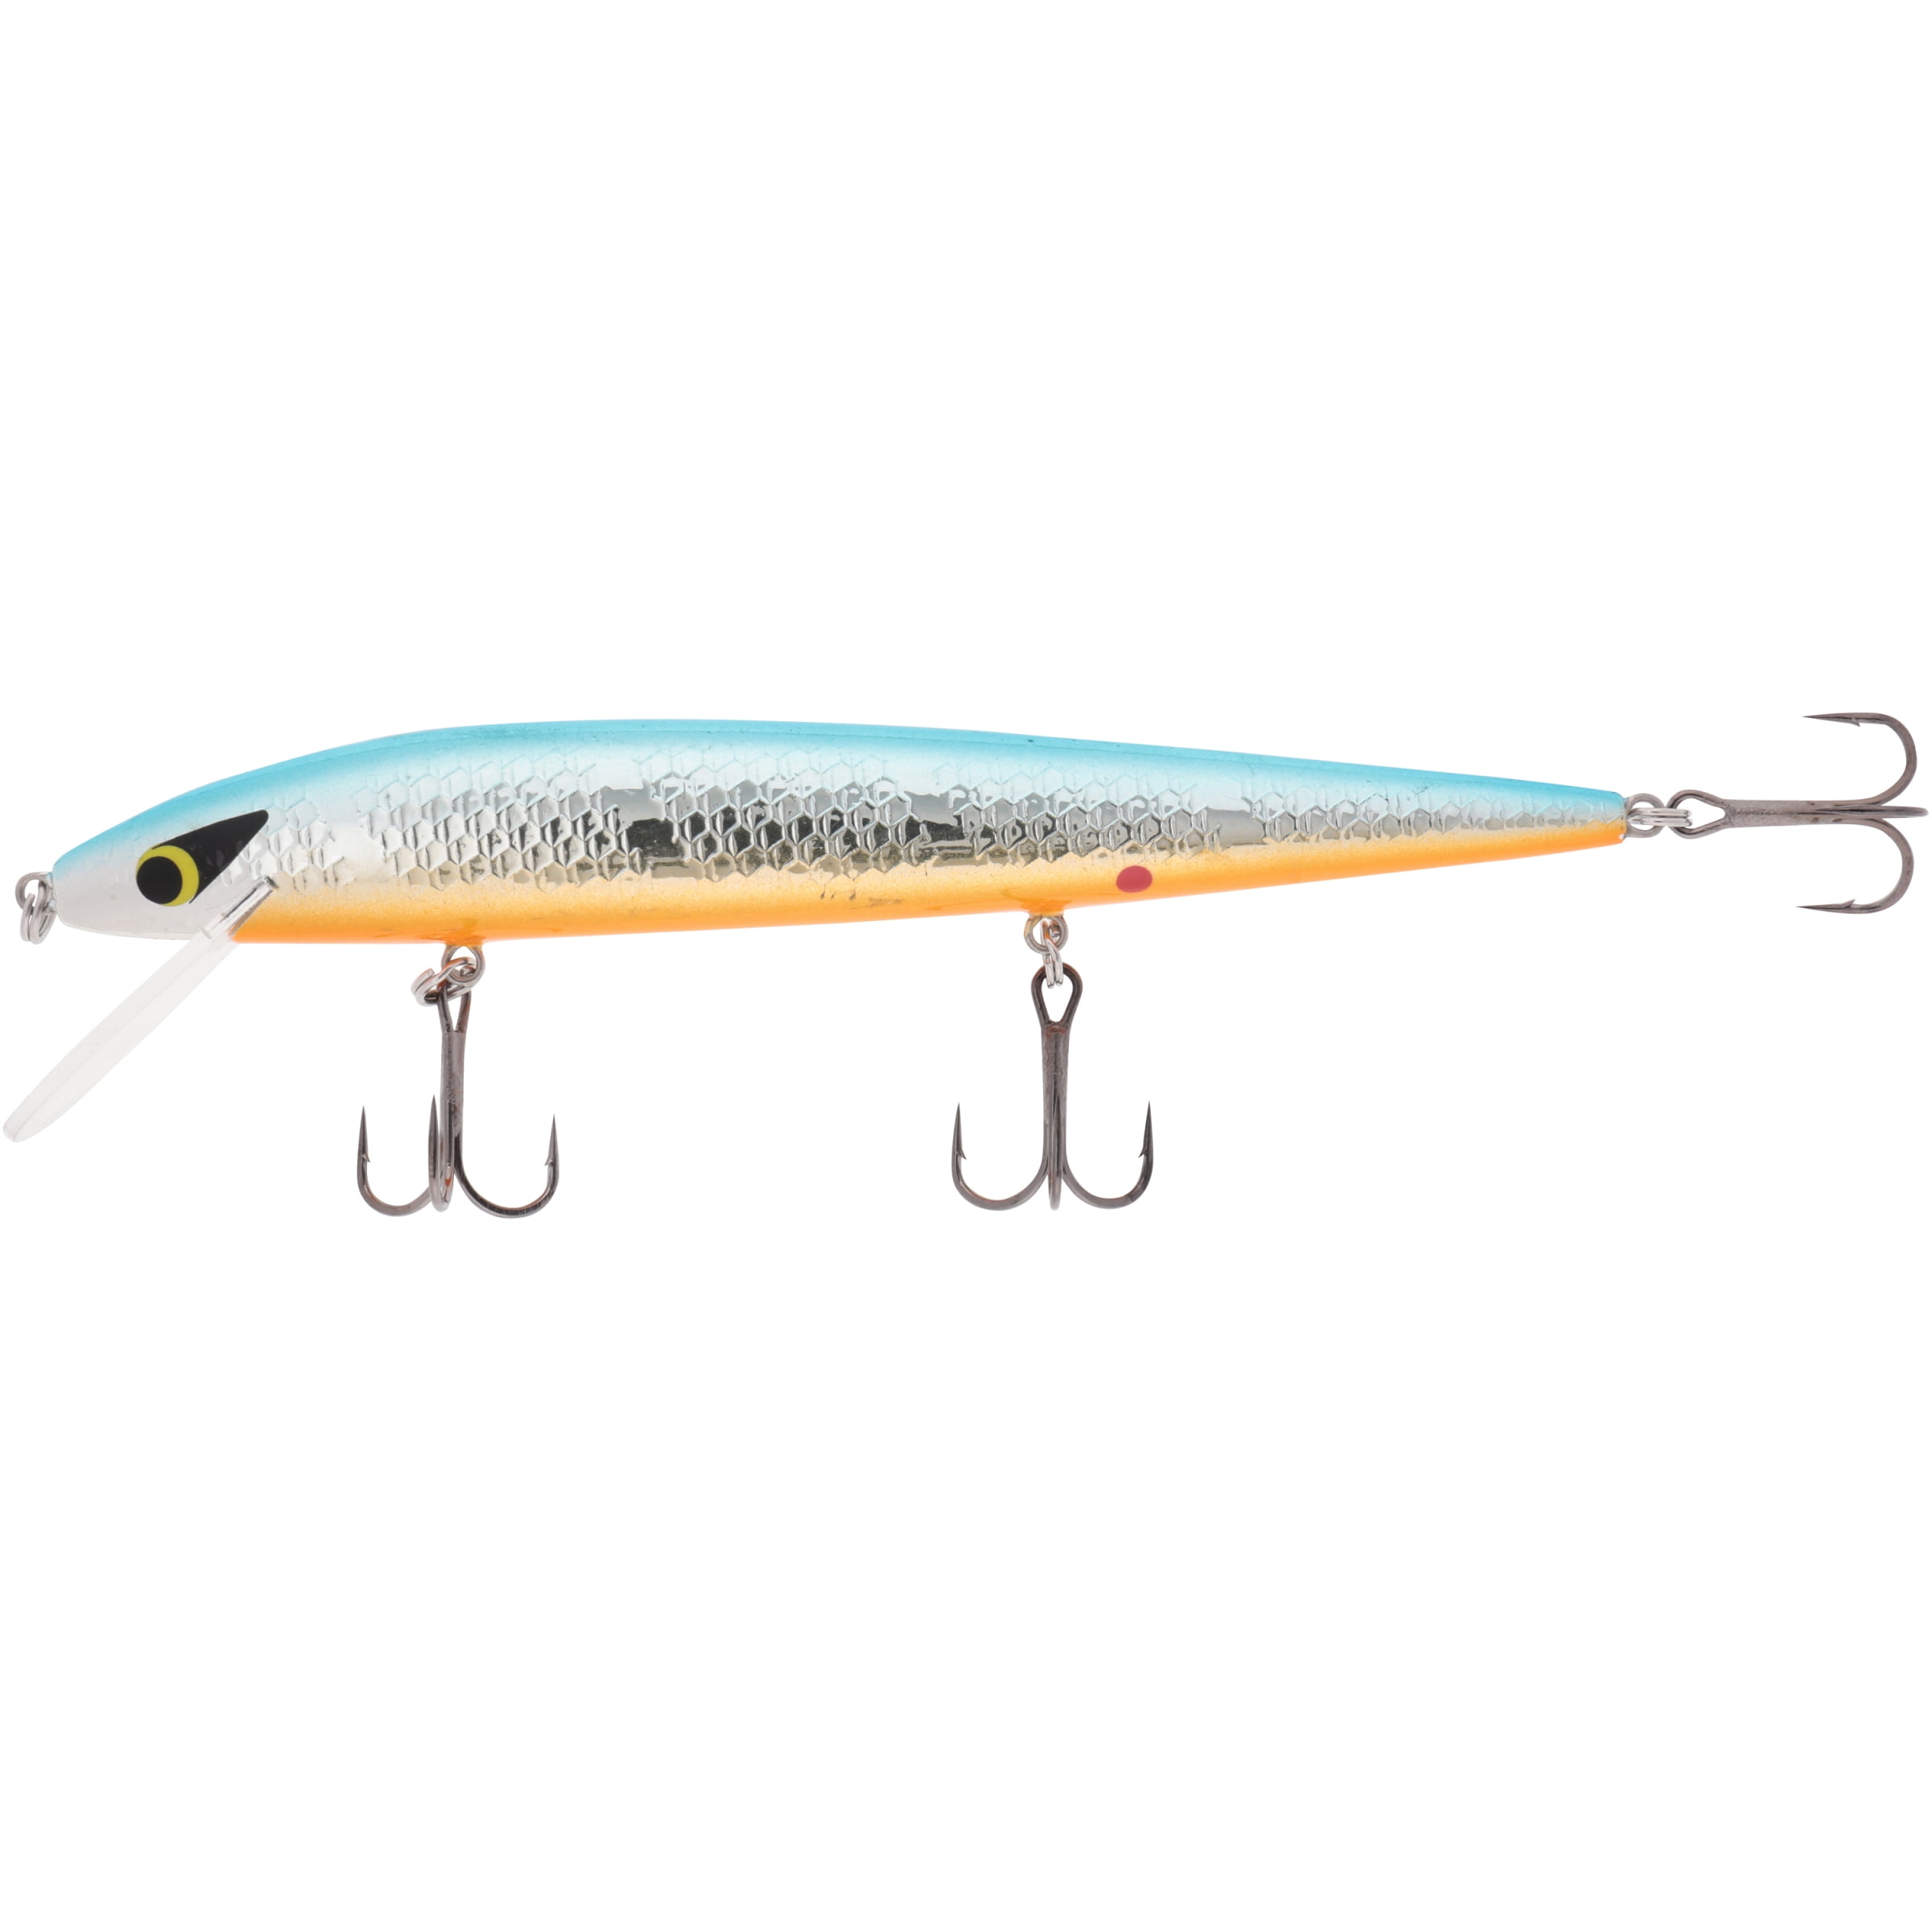 Smithwick Perfect 10 Rogue Fishing Lure Hard bait Chrome Blue Back Orange  Belly 5 1/2 in 5/8 oz